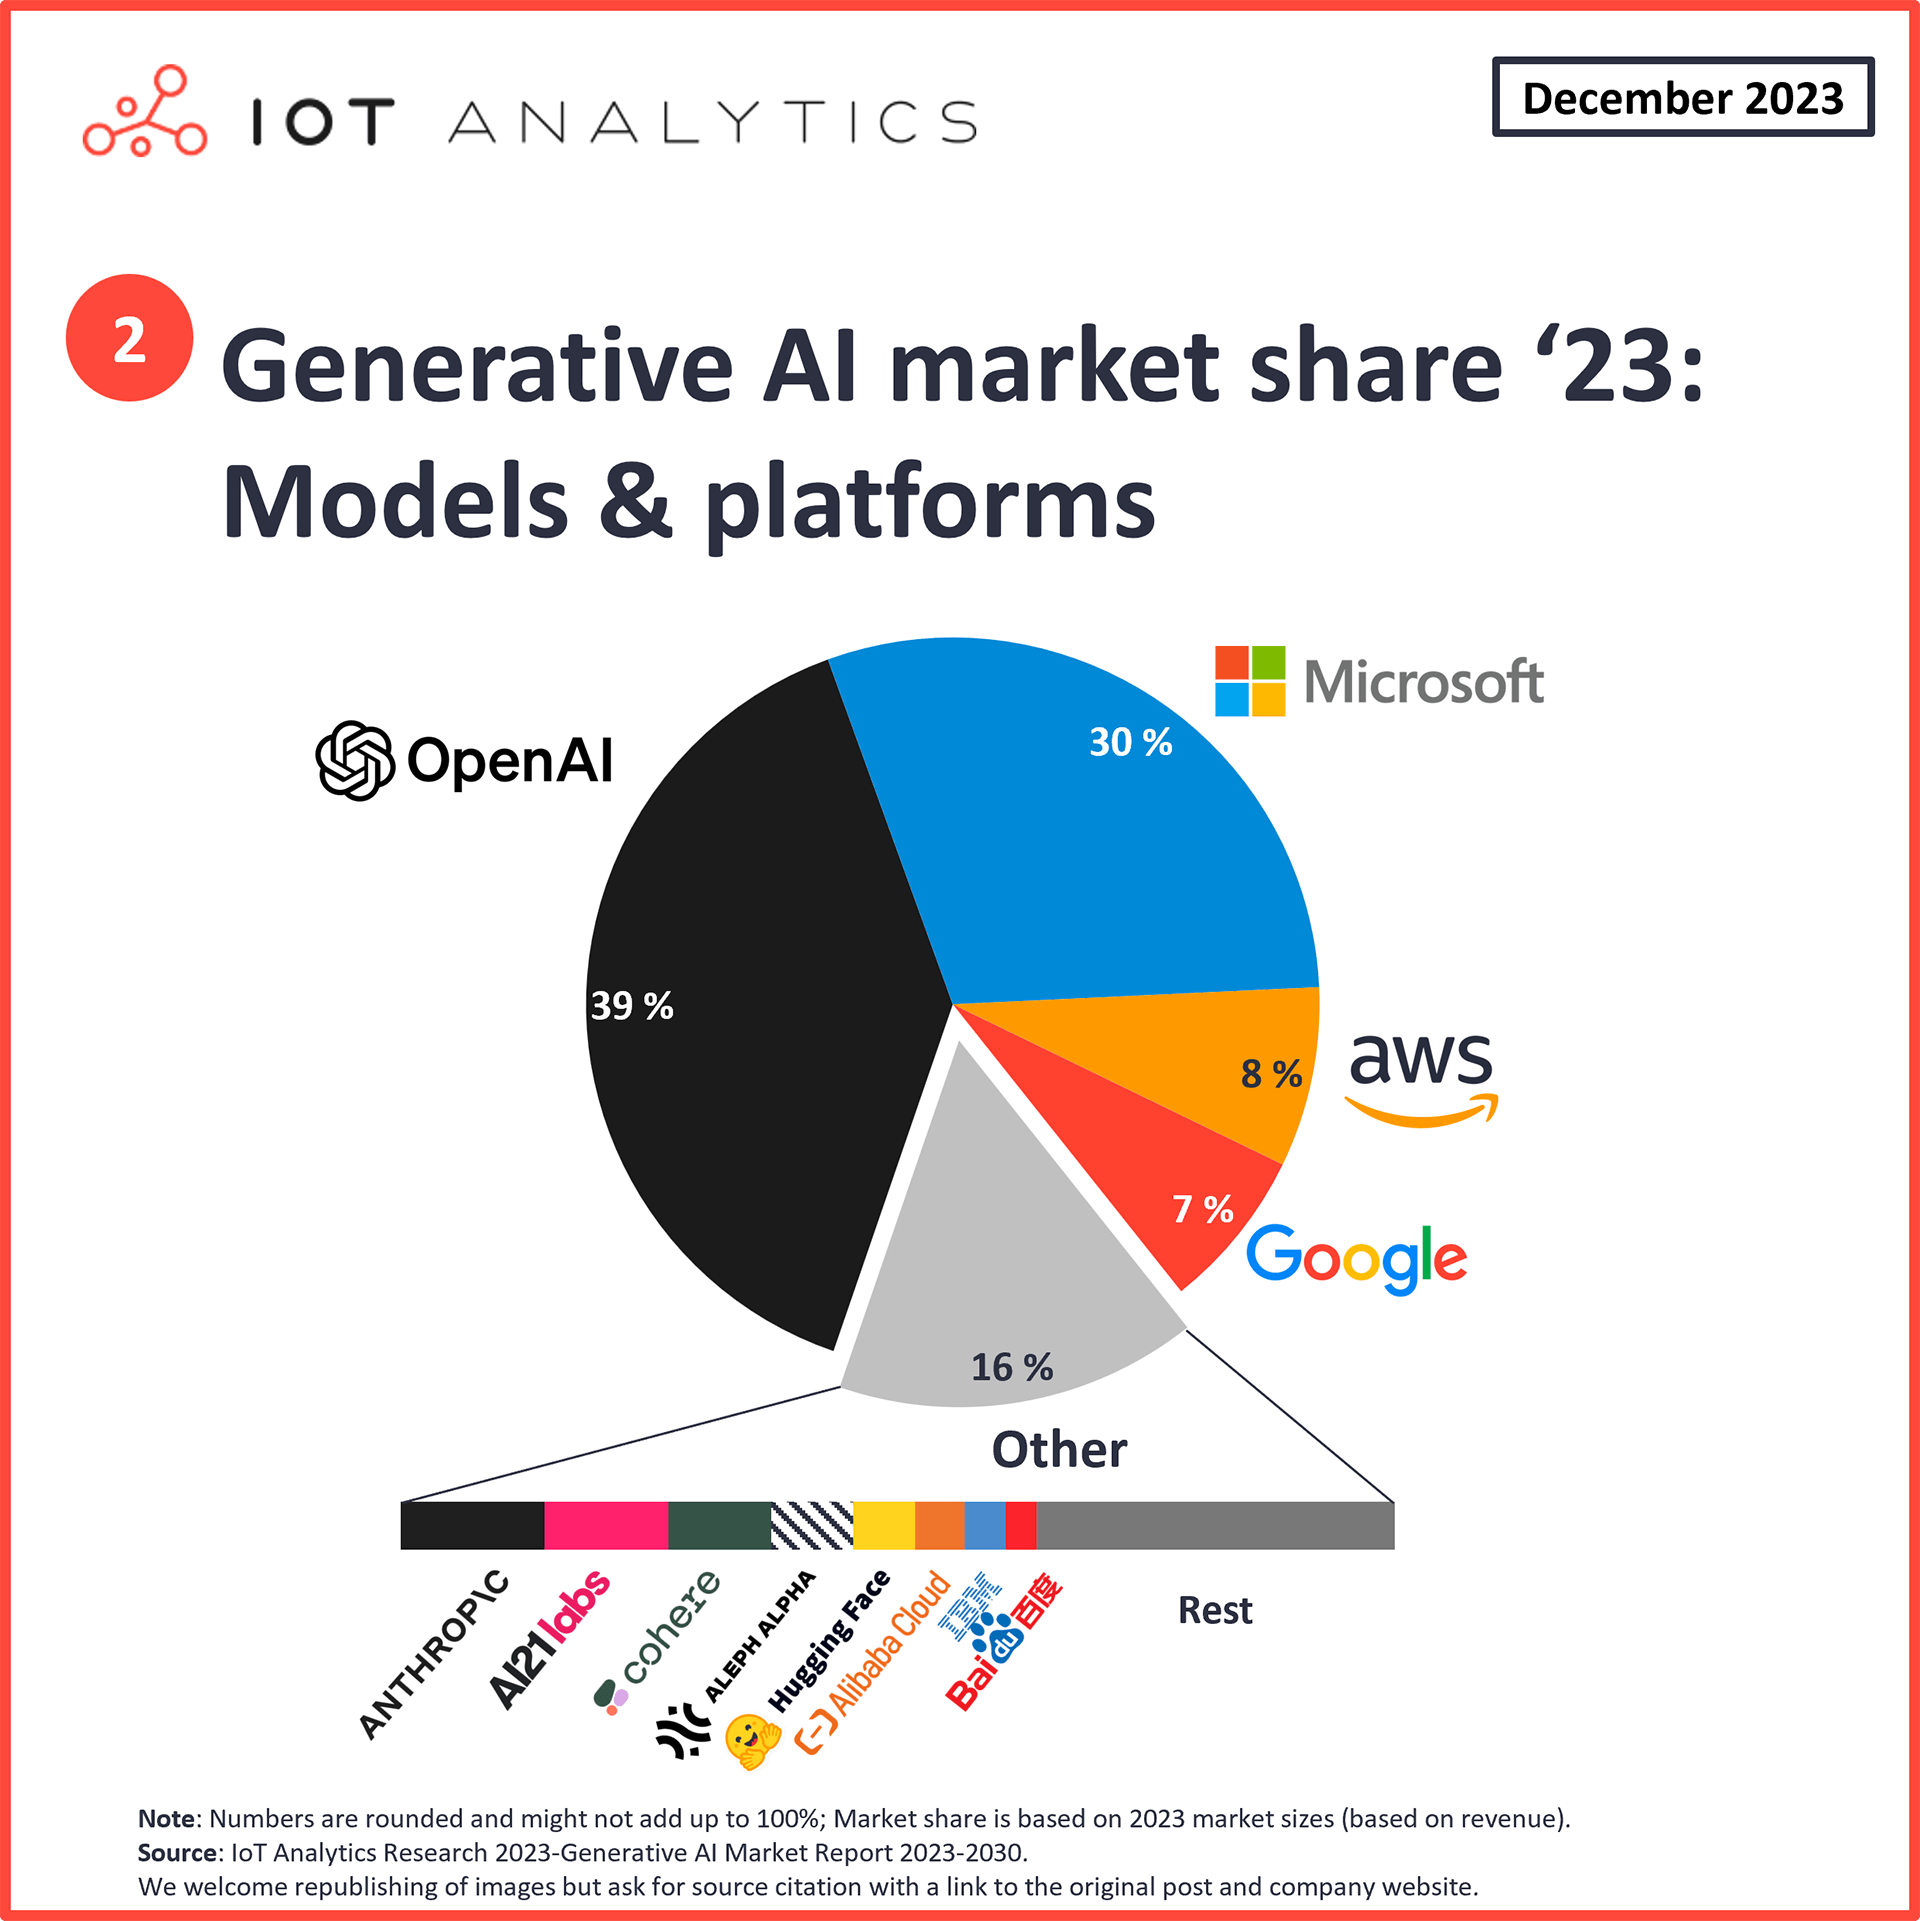 Generative AI models and platforms market share 2023